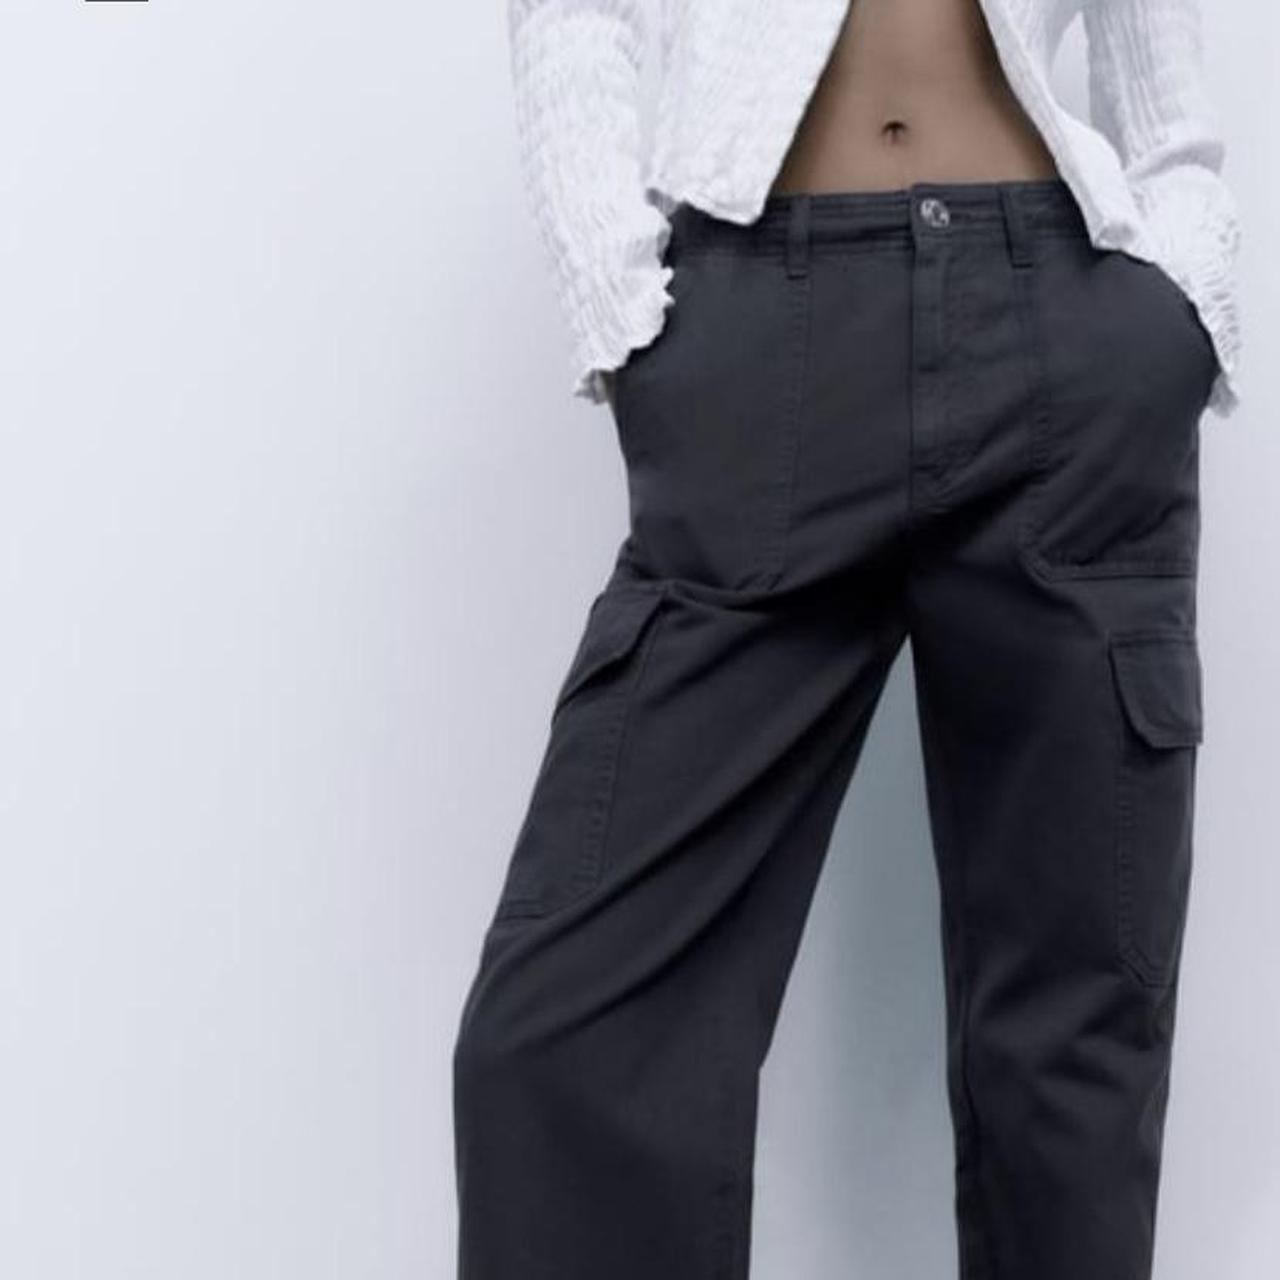 Zara - Utility Cargo Pants - Dark Gray - Men